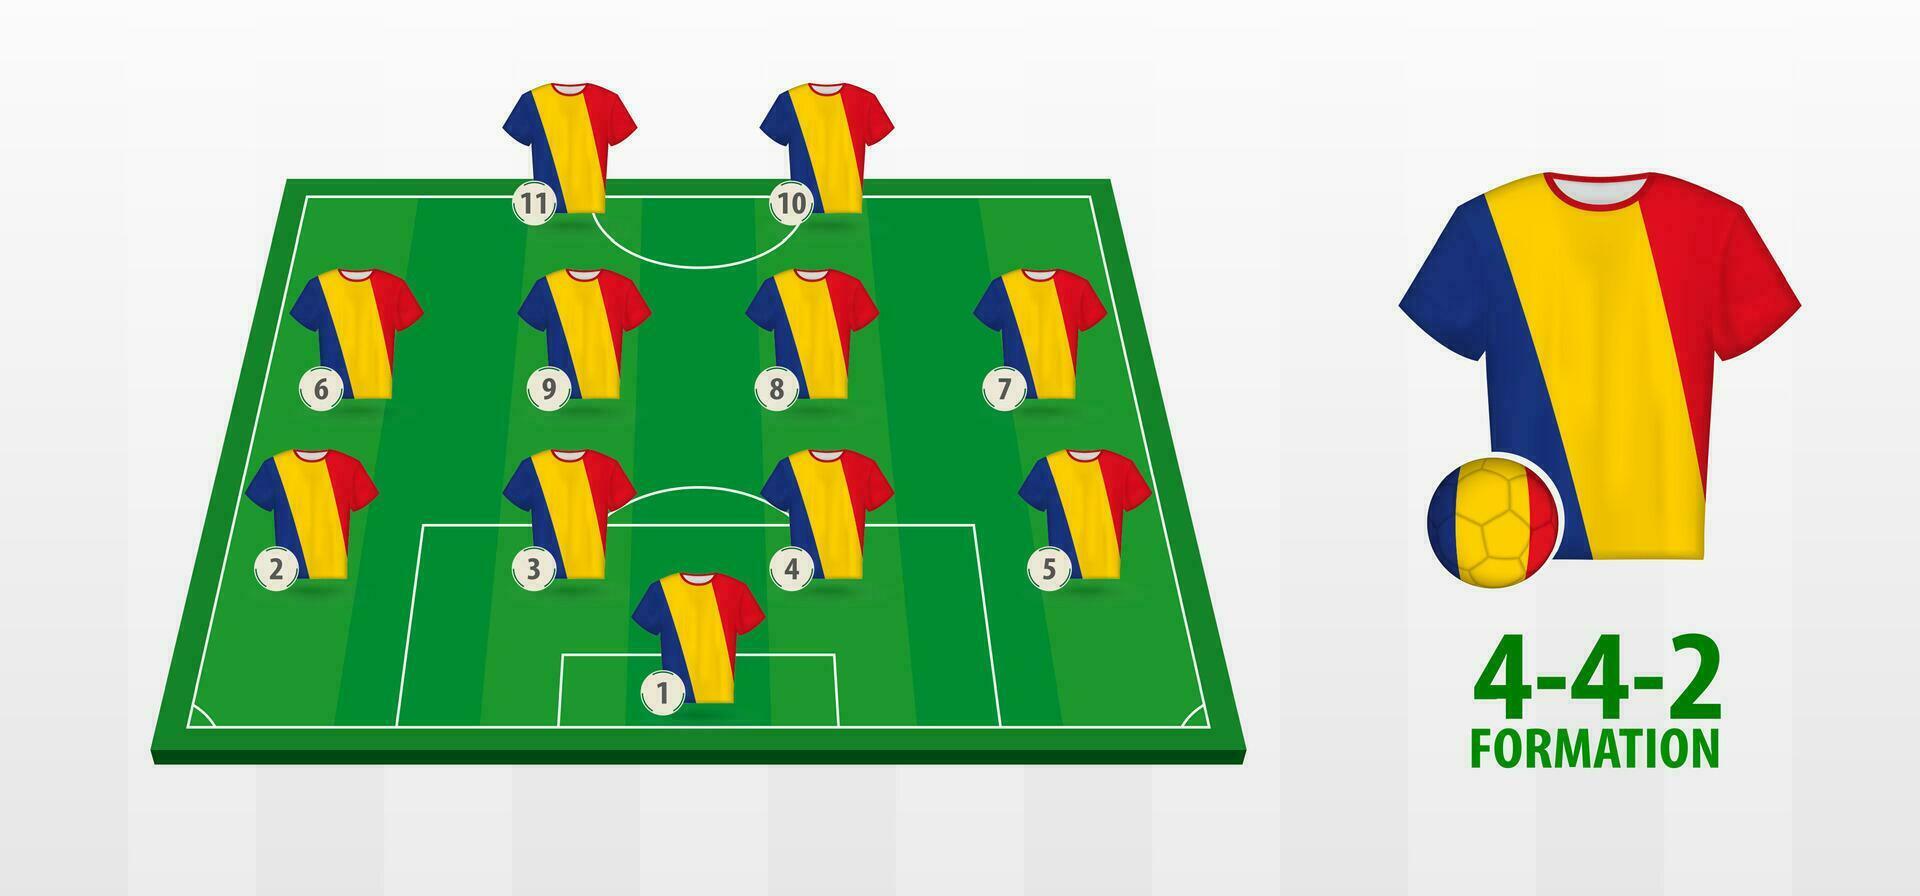 Romania National Football Team Formation on Football Field. vector